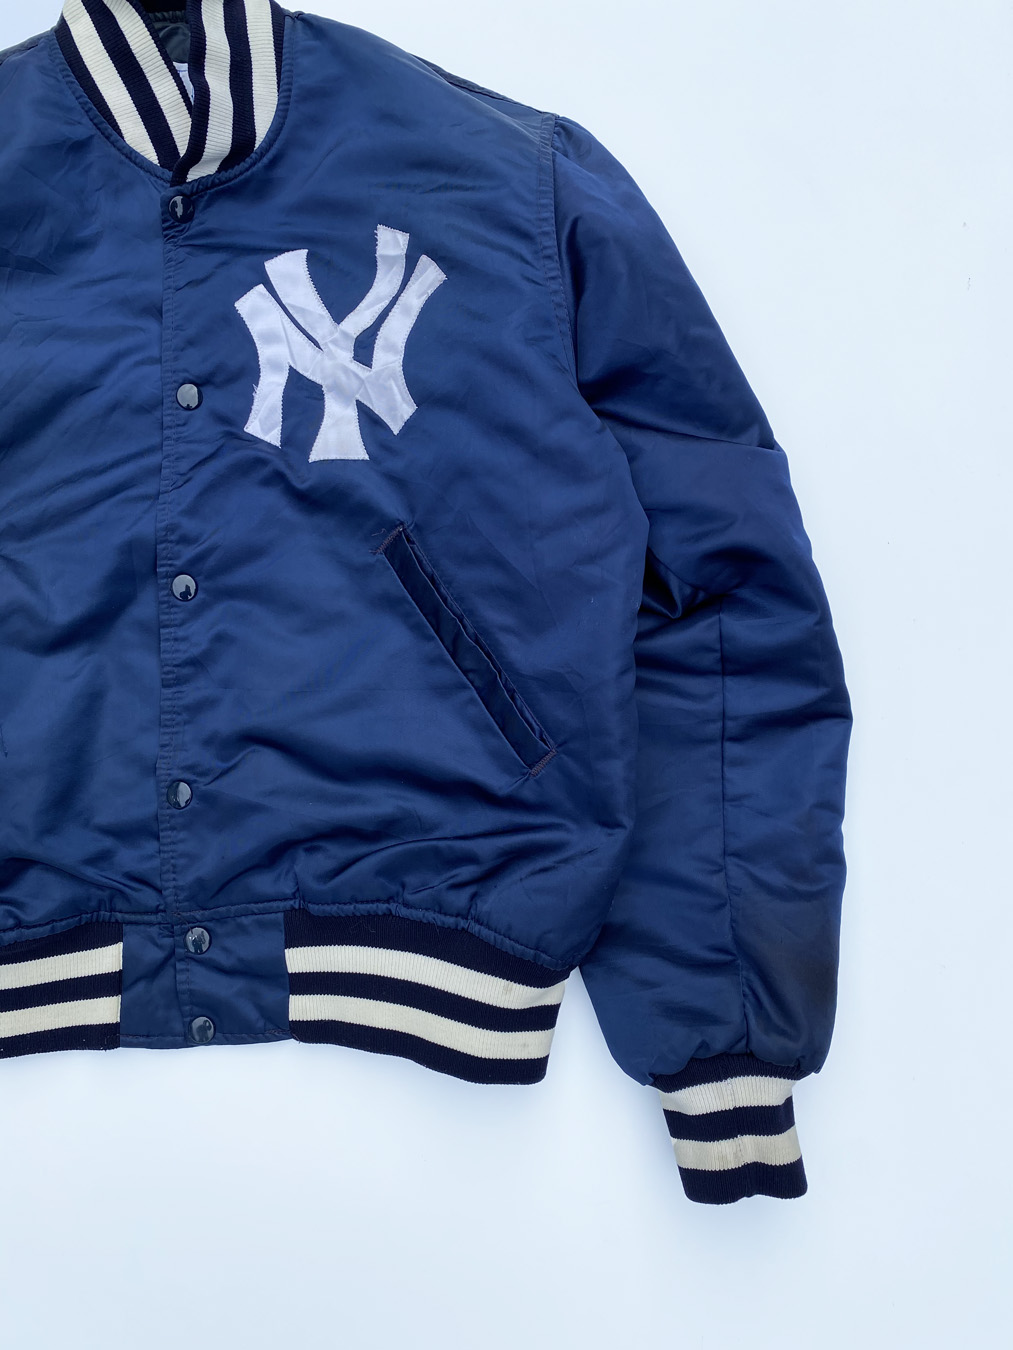 MLB 90s Starter New York Yankees Jacket Navy (XL) – Chop Suey Official